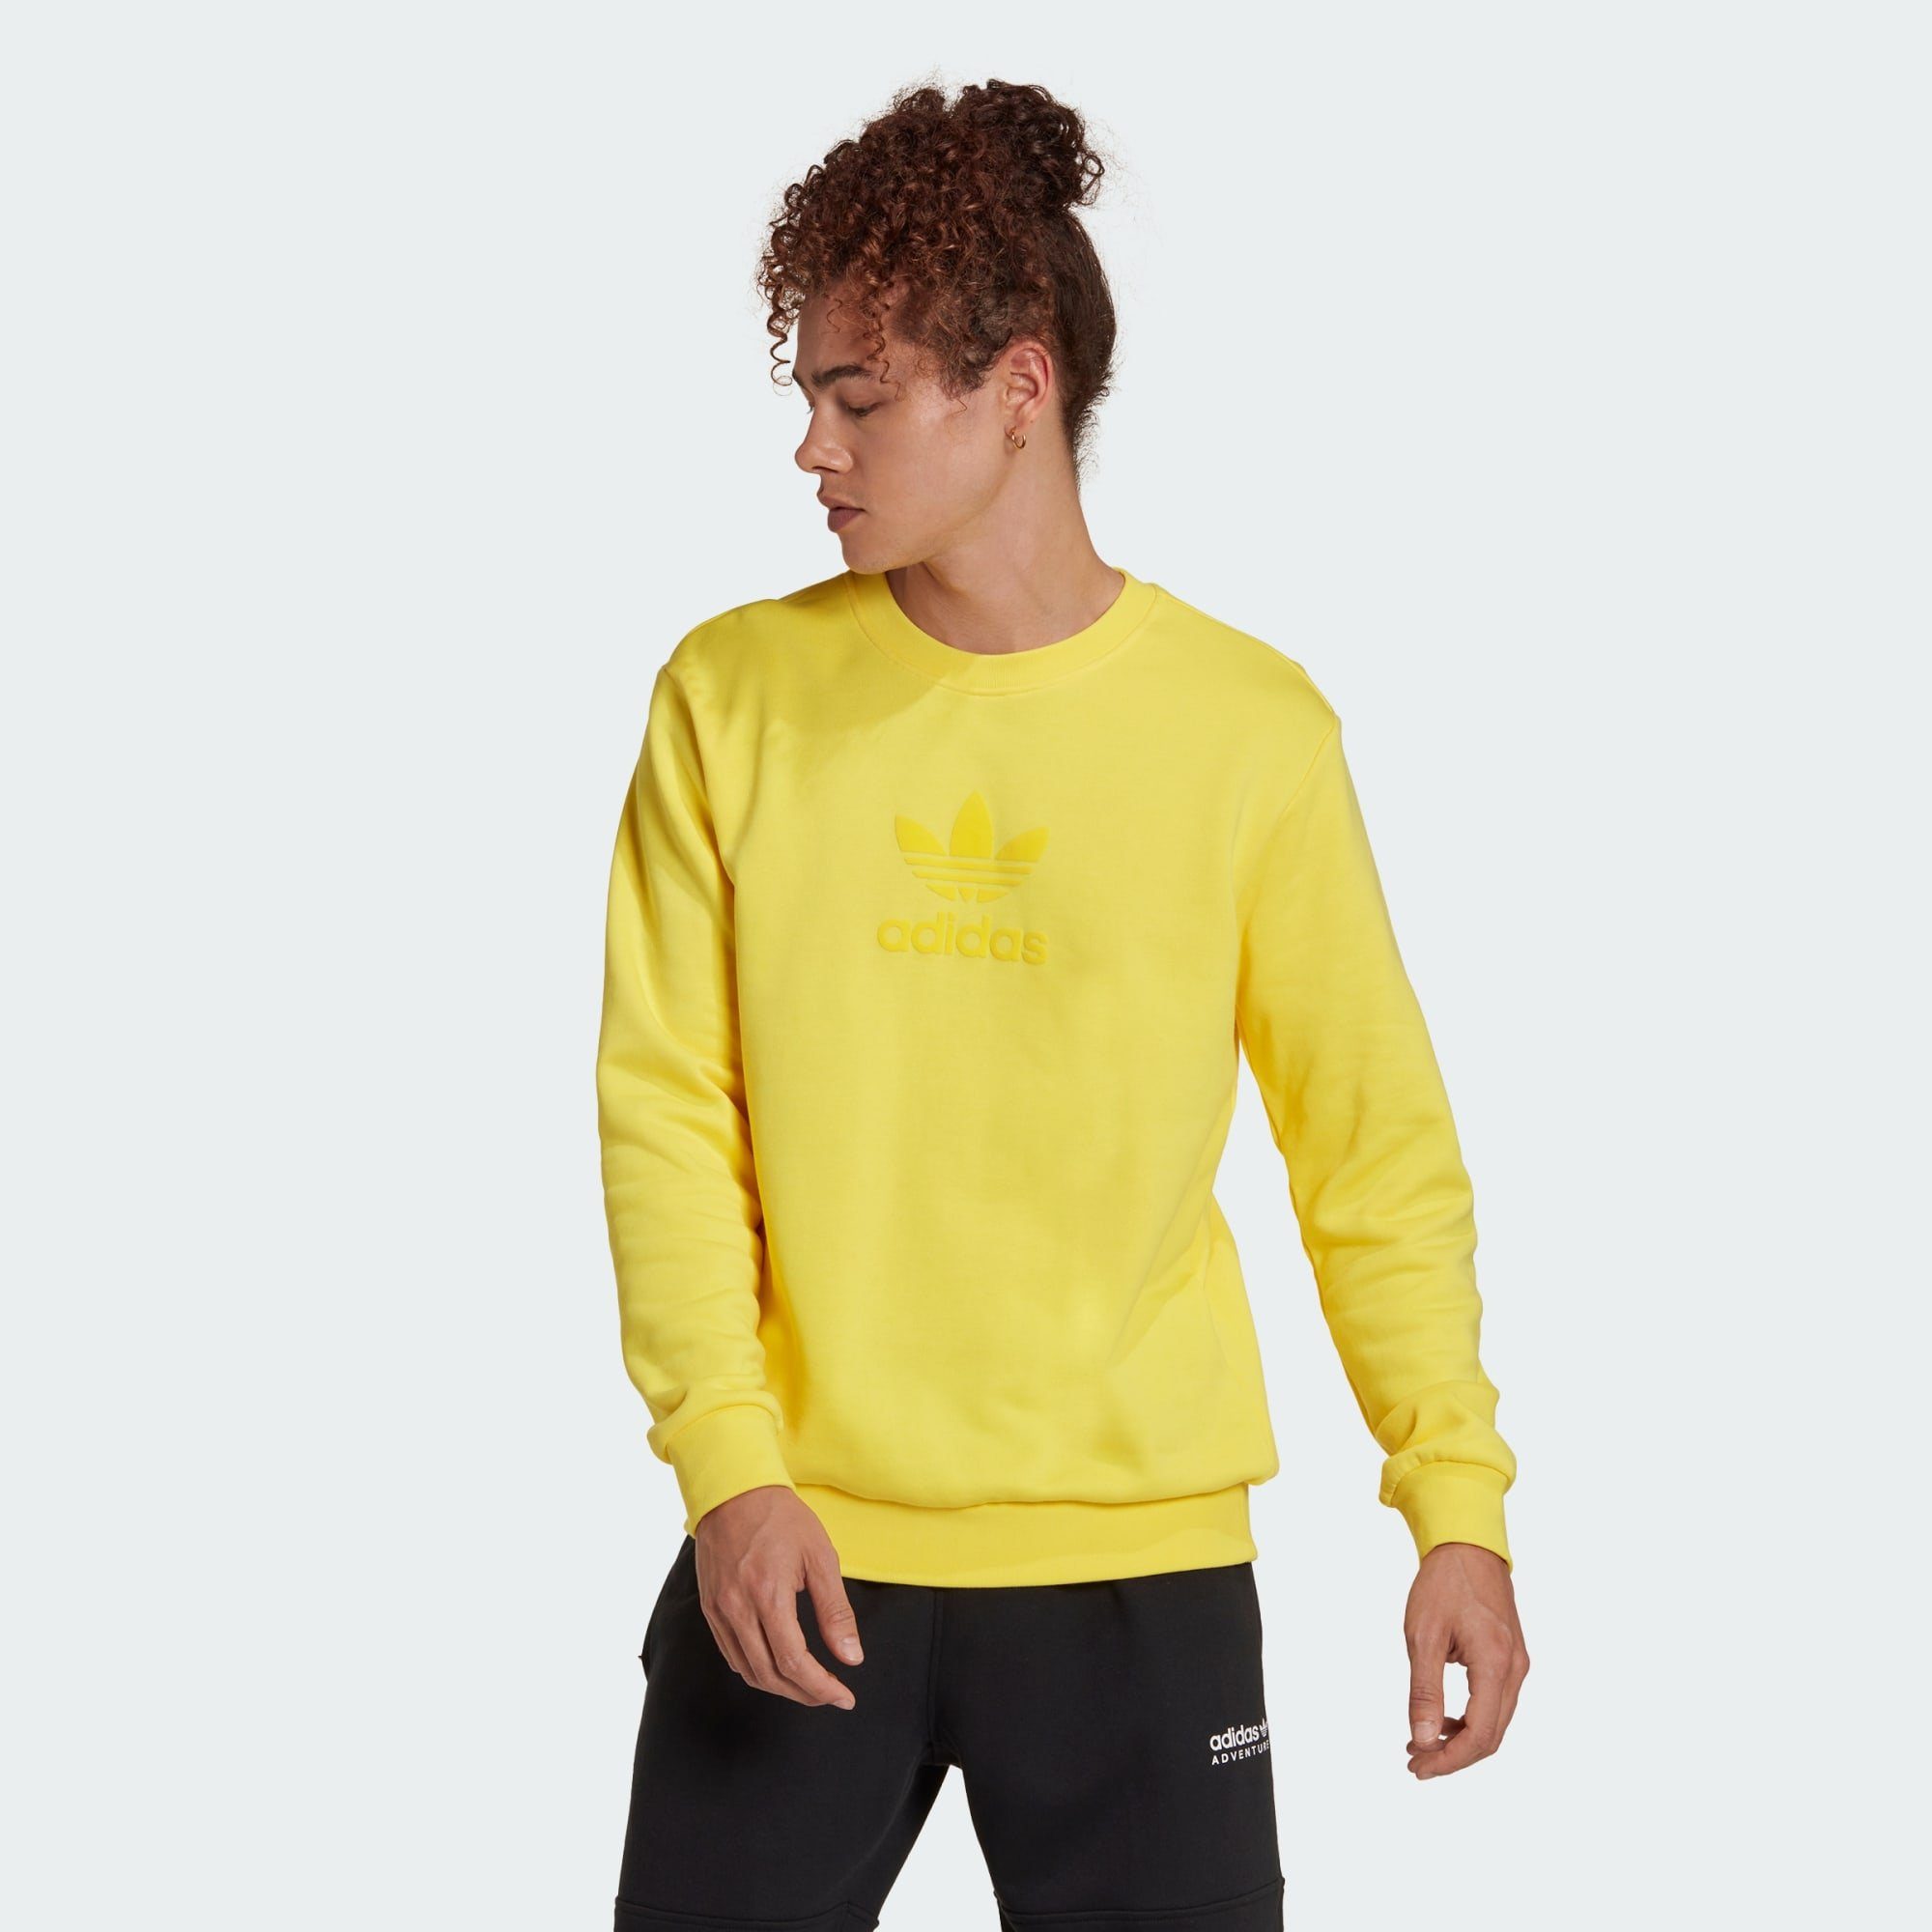 SWEATSHIRT adidas SERIES Originals STREET Sweatshirt TREFOIL Impact Yellow